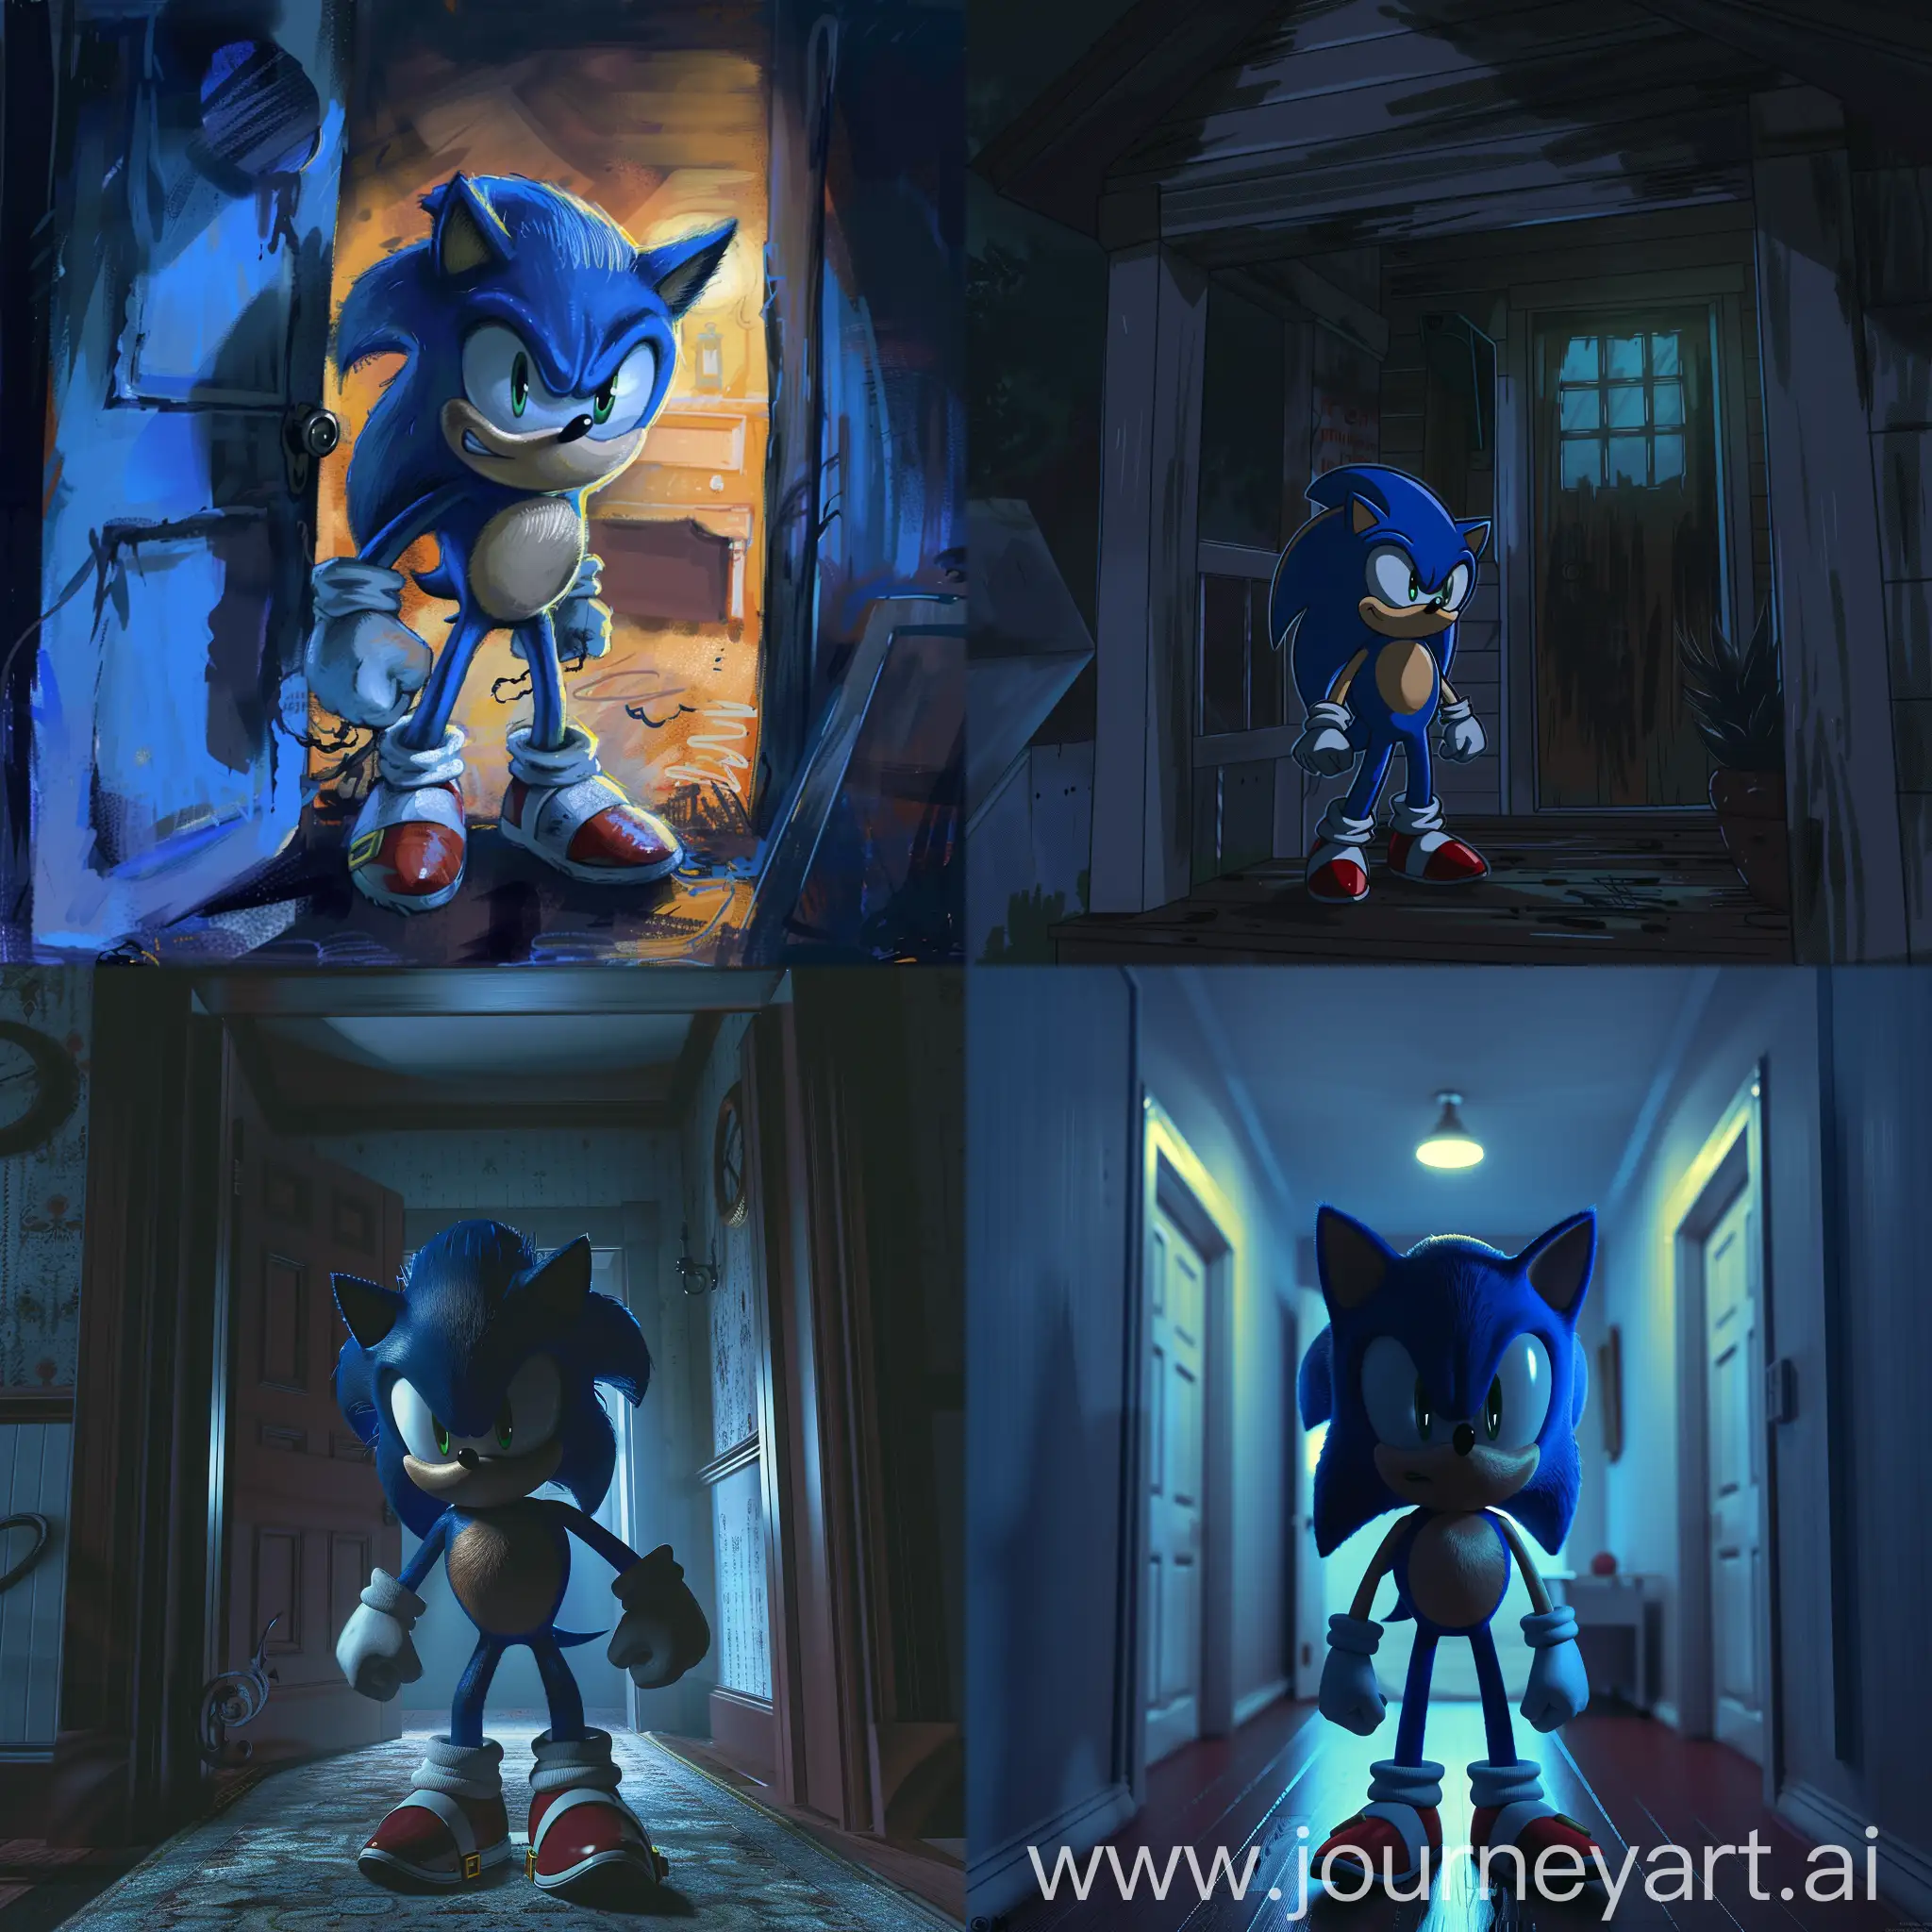 Creepy-Sonic-the-Hedgehog-Stands-by-Doorway-in-Night-Scene